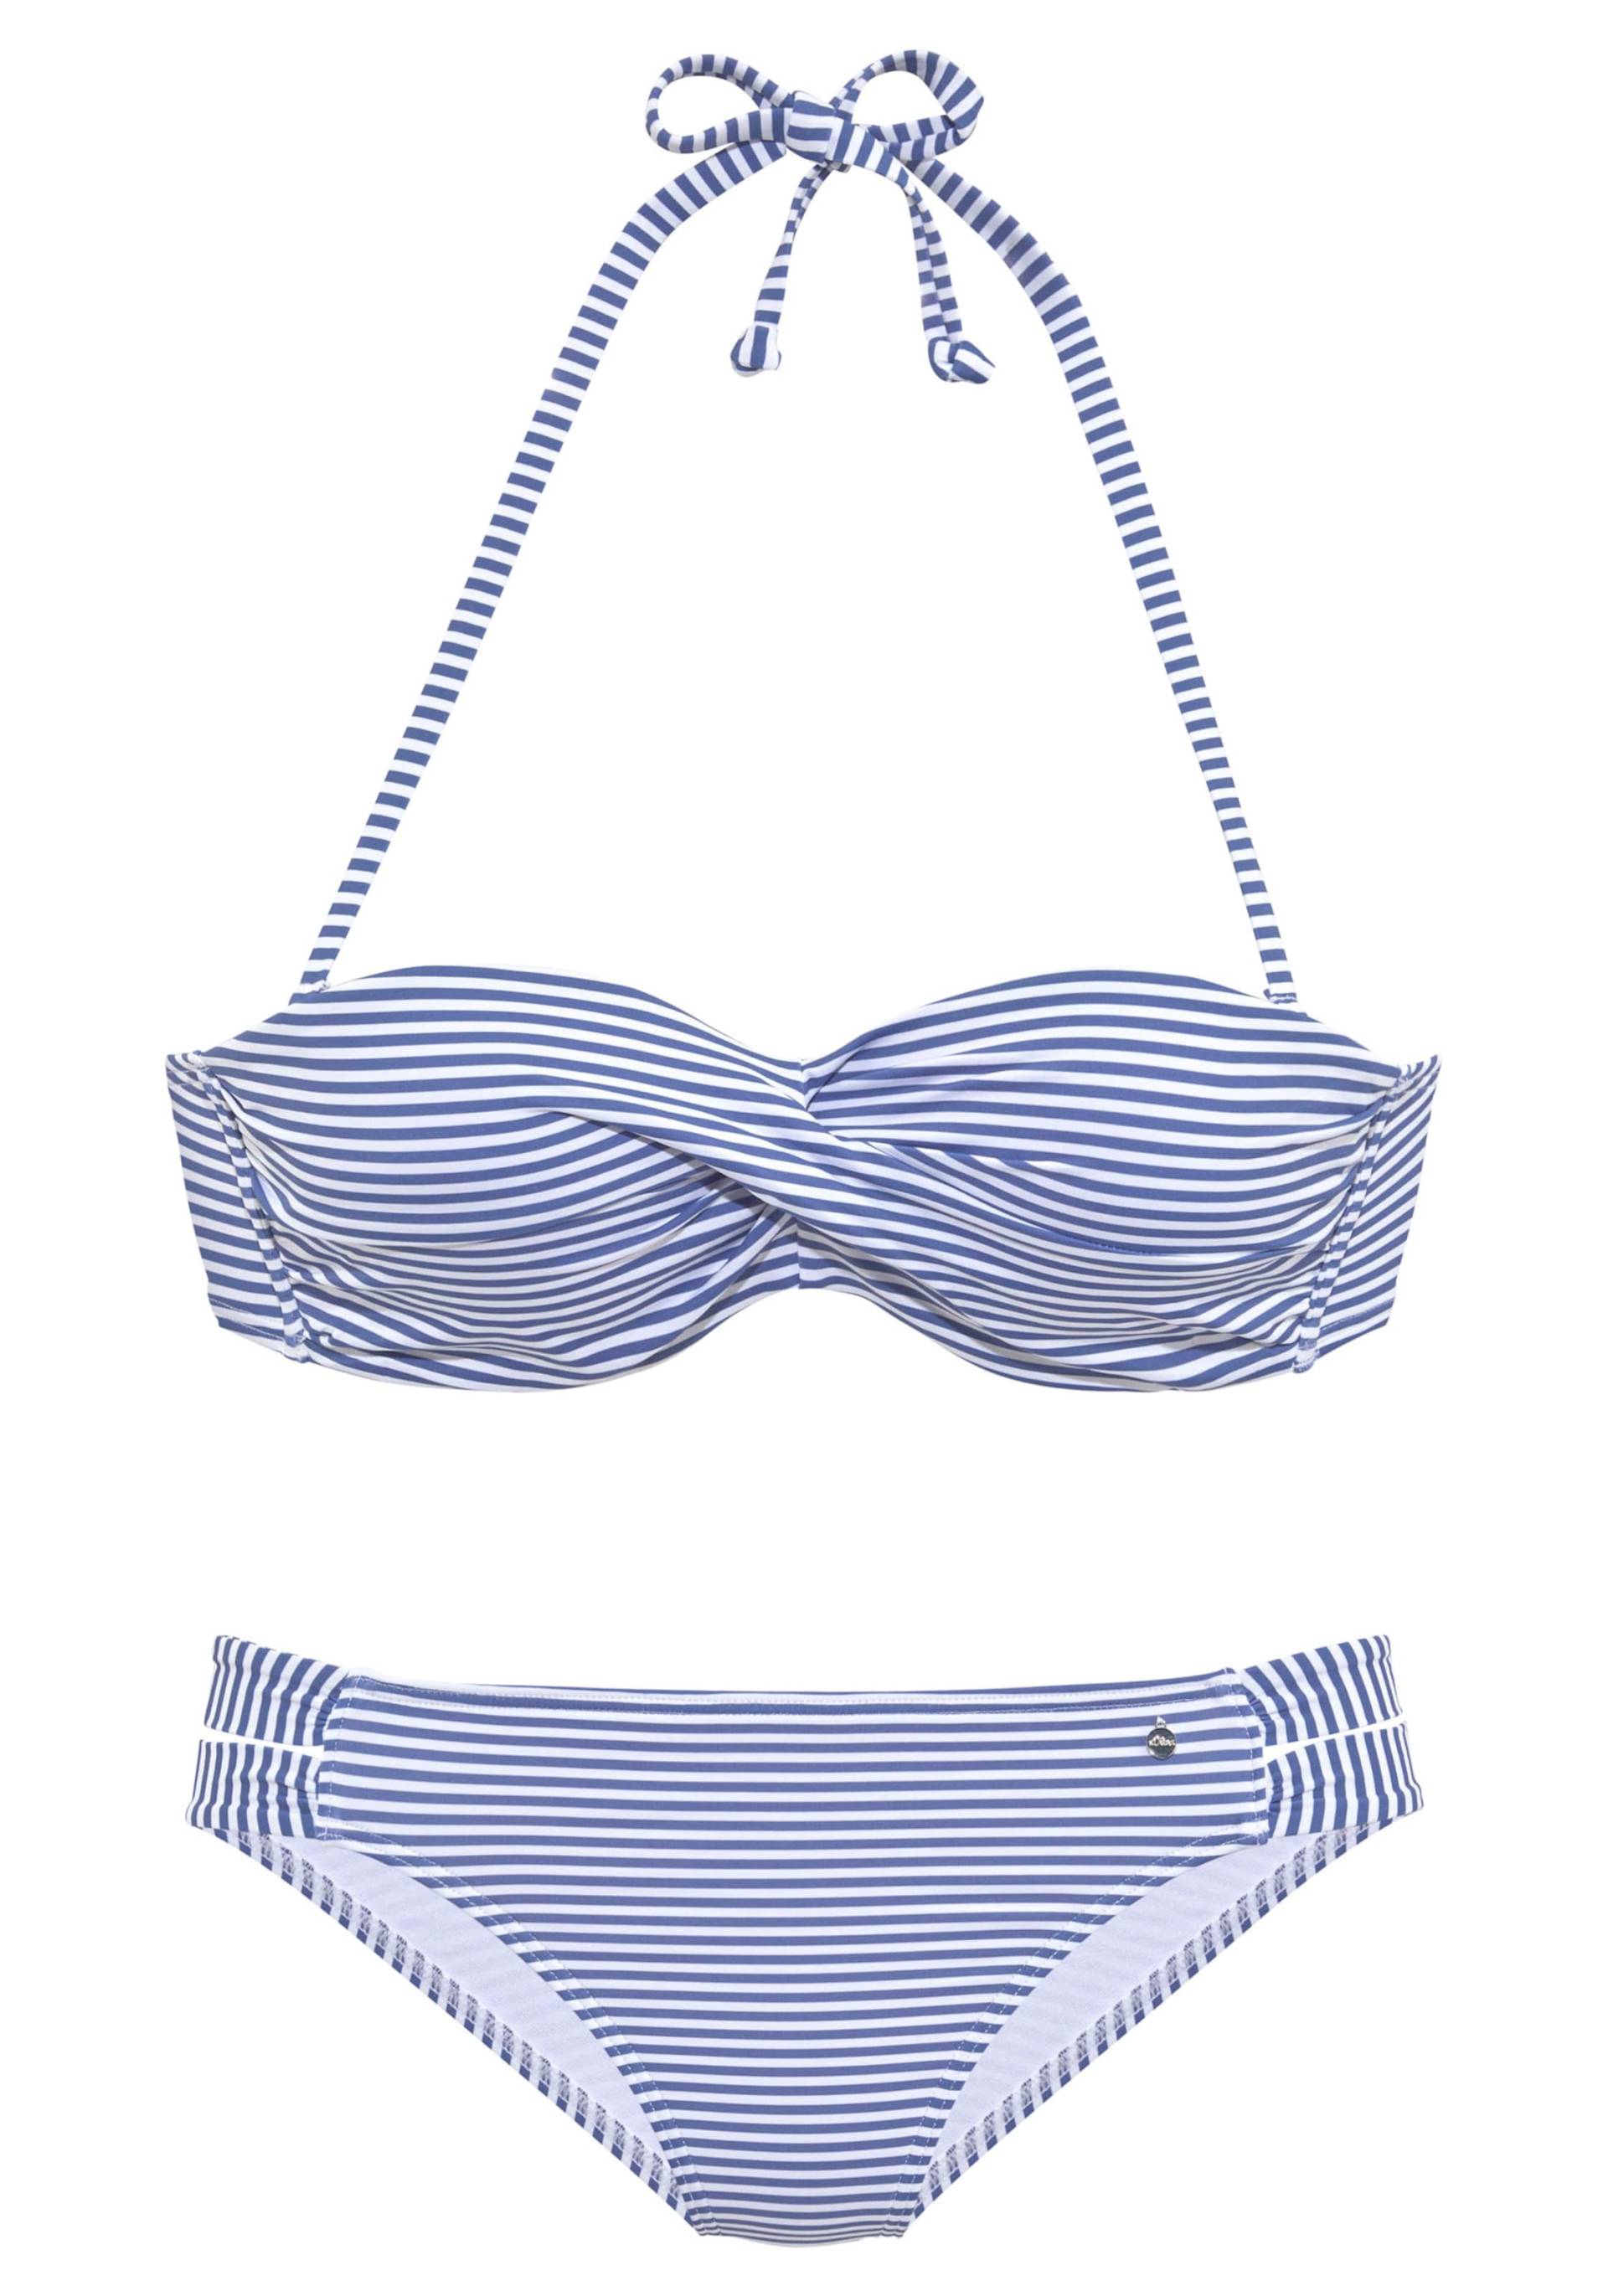 Bügel-Bandeau-Bikini in hellblau-weiss von s.Oliver